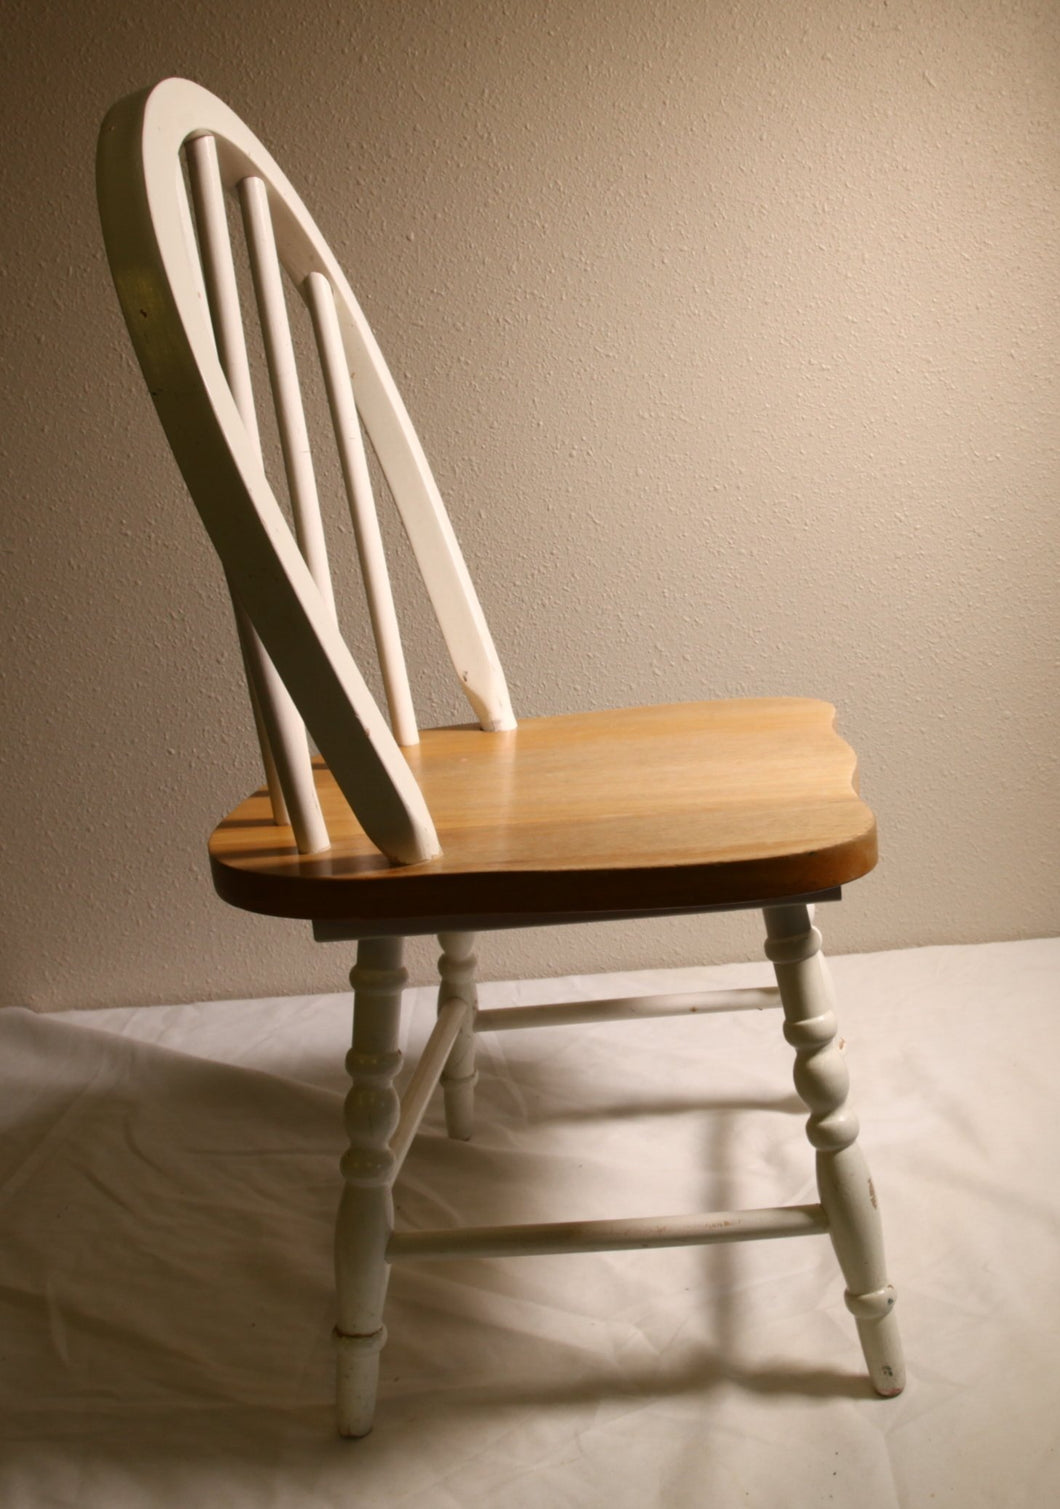 Wooden Chair #6: 11.5